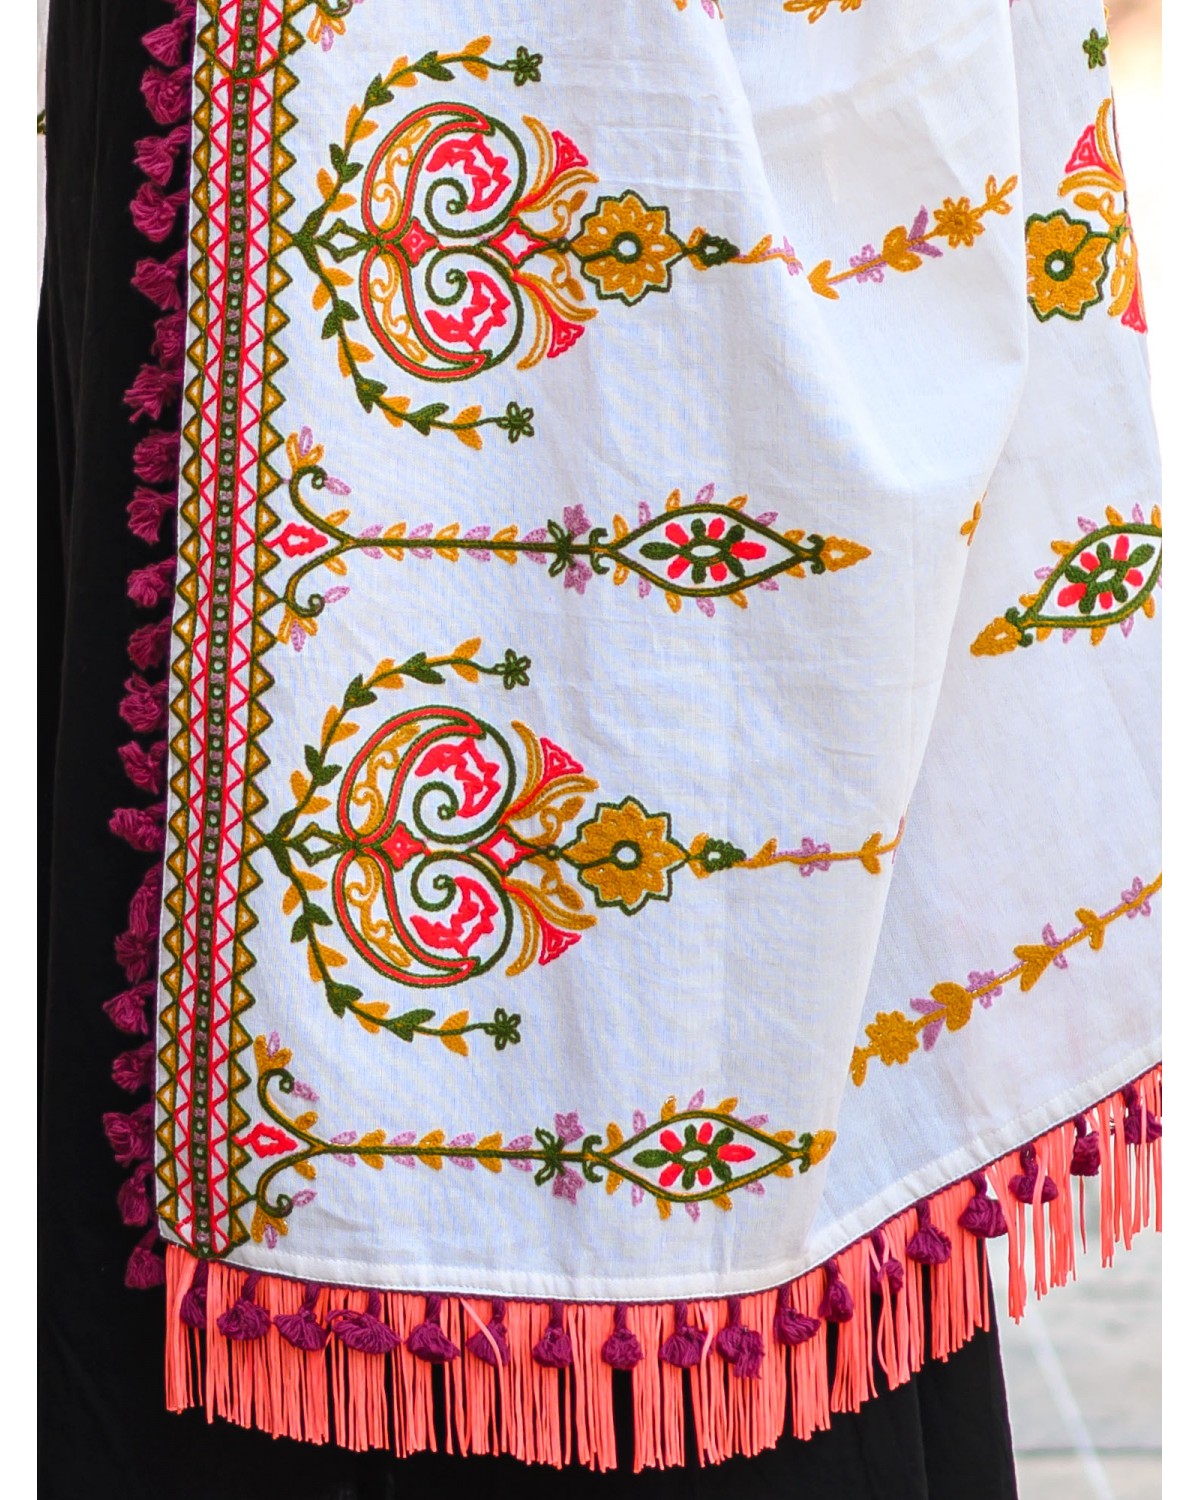 Women's Off-White Heavily Aari Embroidered Khadi Shawl/Dupatta With Wine Cotton Tassel - MESMORA FASHION